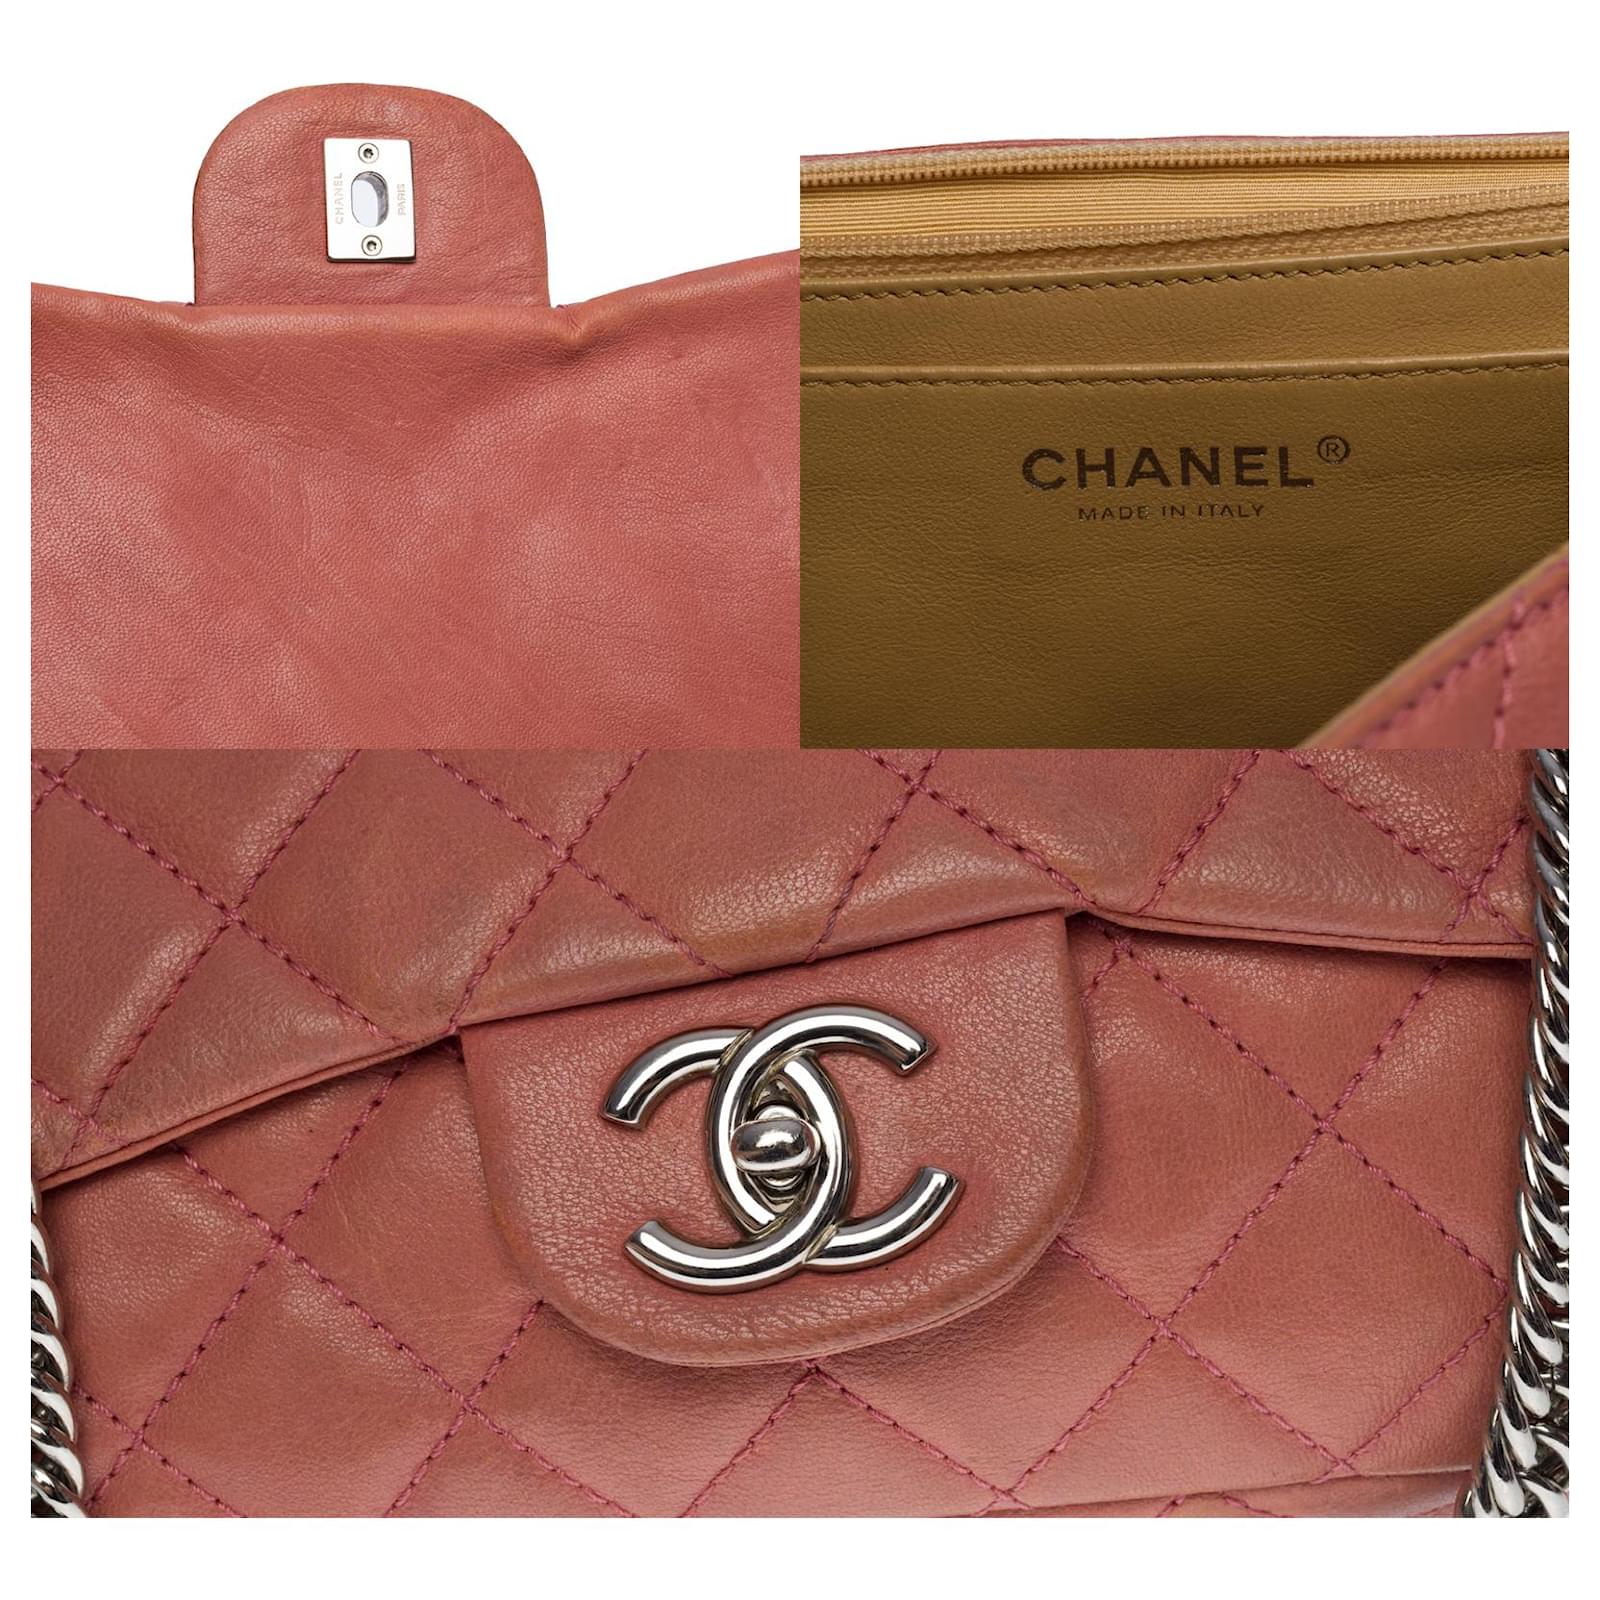 Chanel Timeless Classic Handbag in Salmon Pink Python